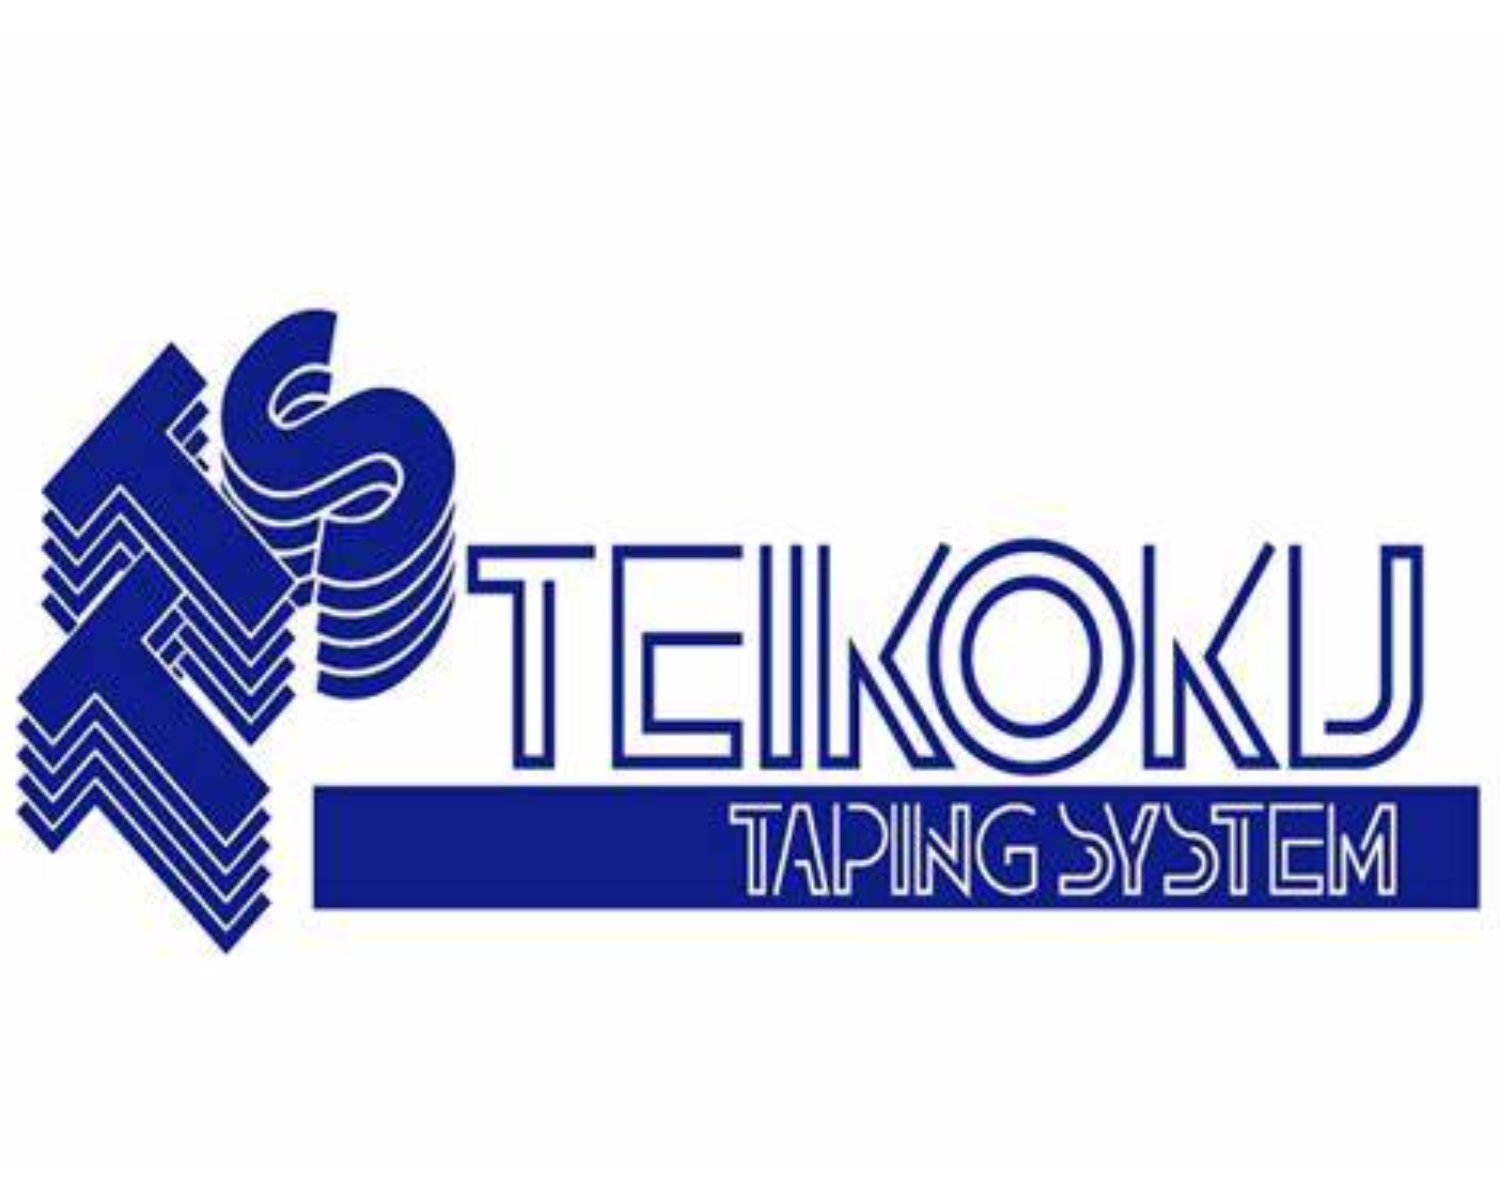 Teikoku Taping System Inc